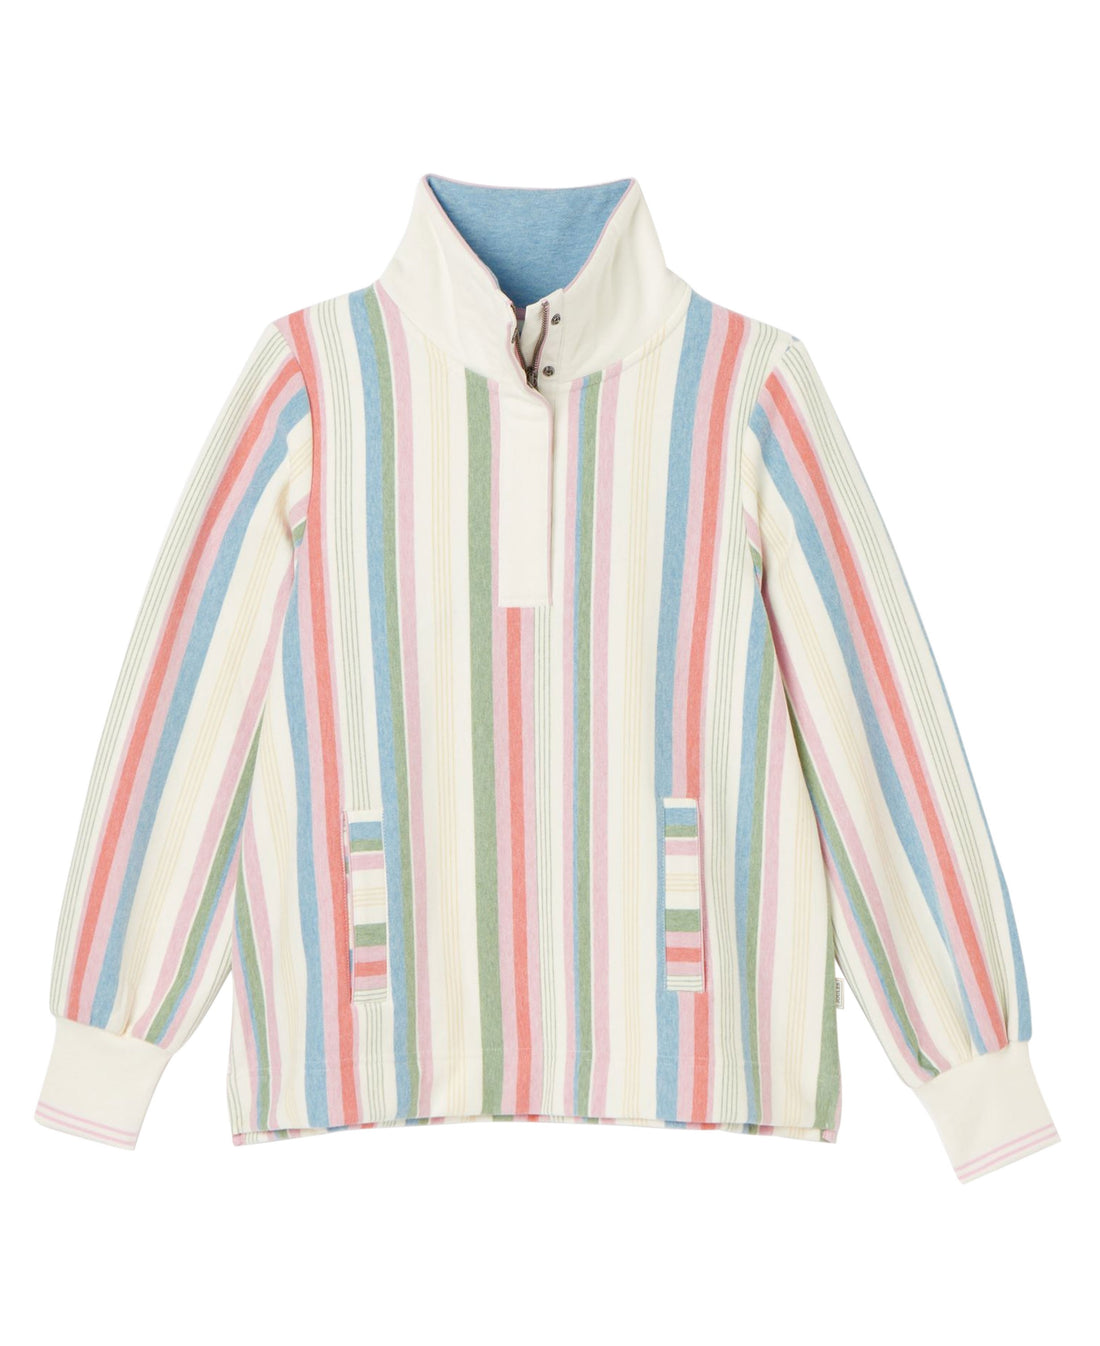 Burnham Funnel Neck Sweatshirt - Multi Stripe